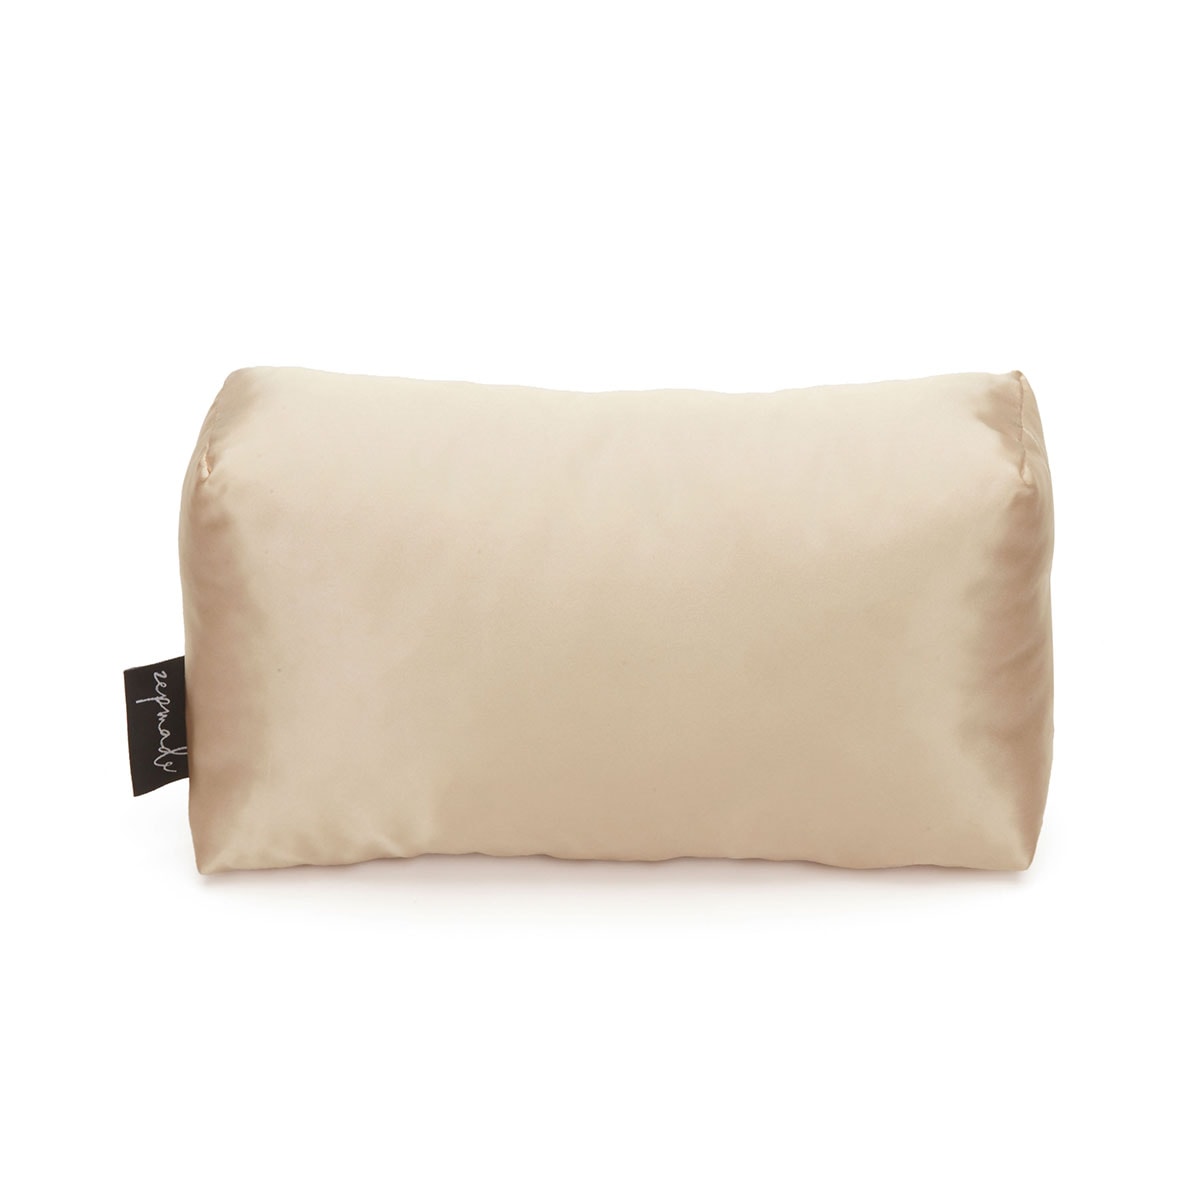 Purse Bag Pillow Shaper Insert, Handbag Shaper Protector For Chanel  Gabrielle/19/CF/2.55/Boy